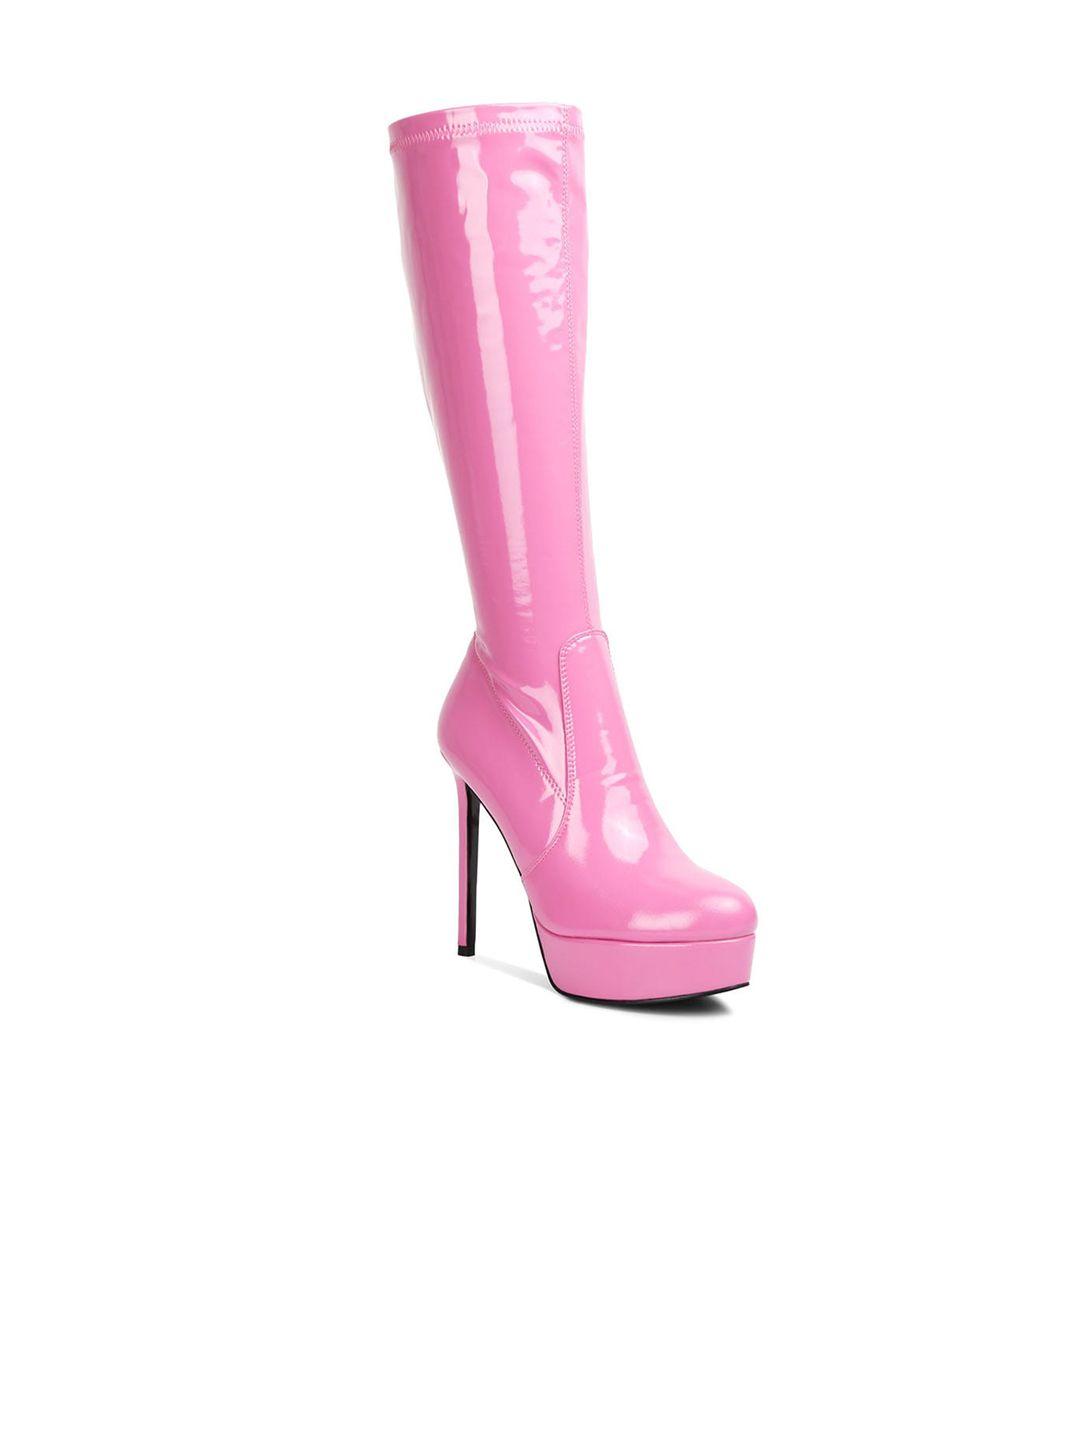 london-rag-women-calf-length-stiletto-boots